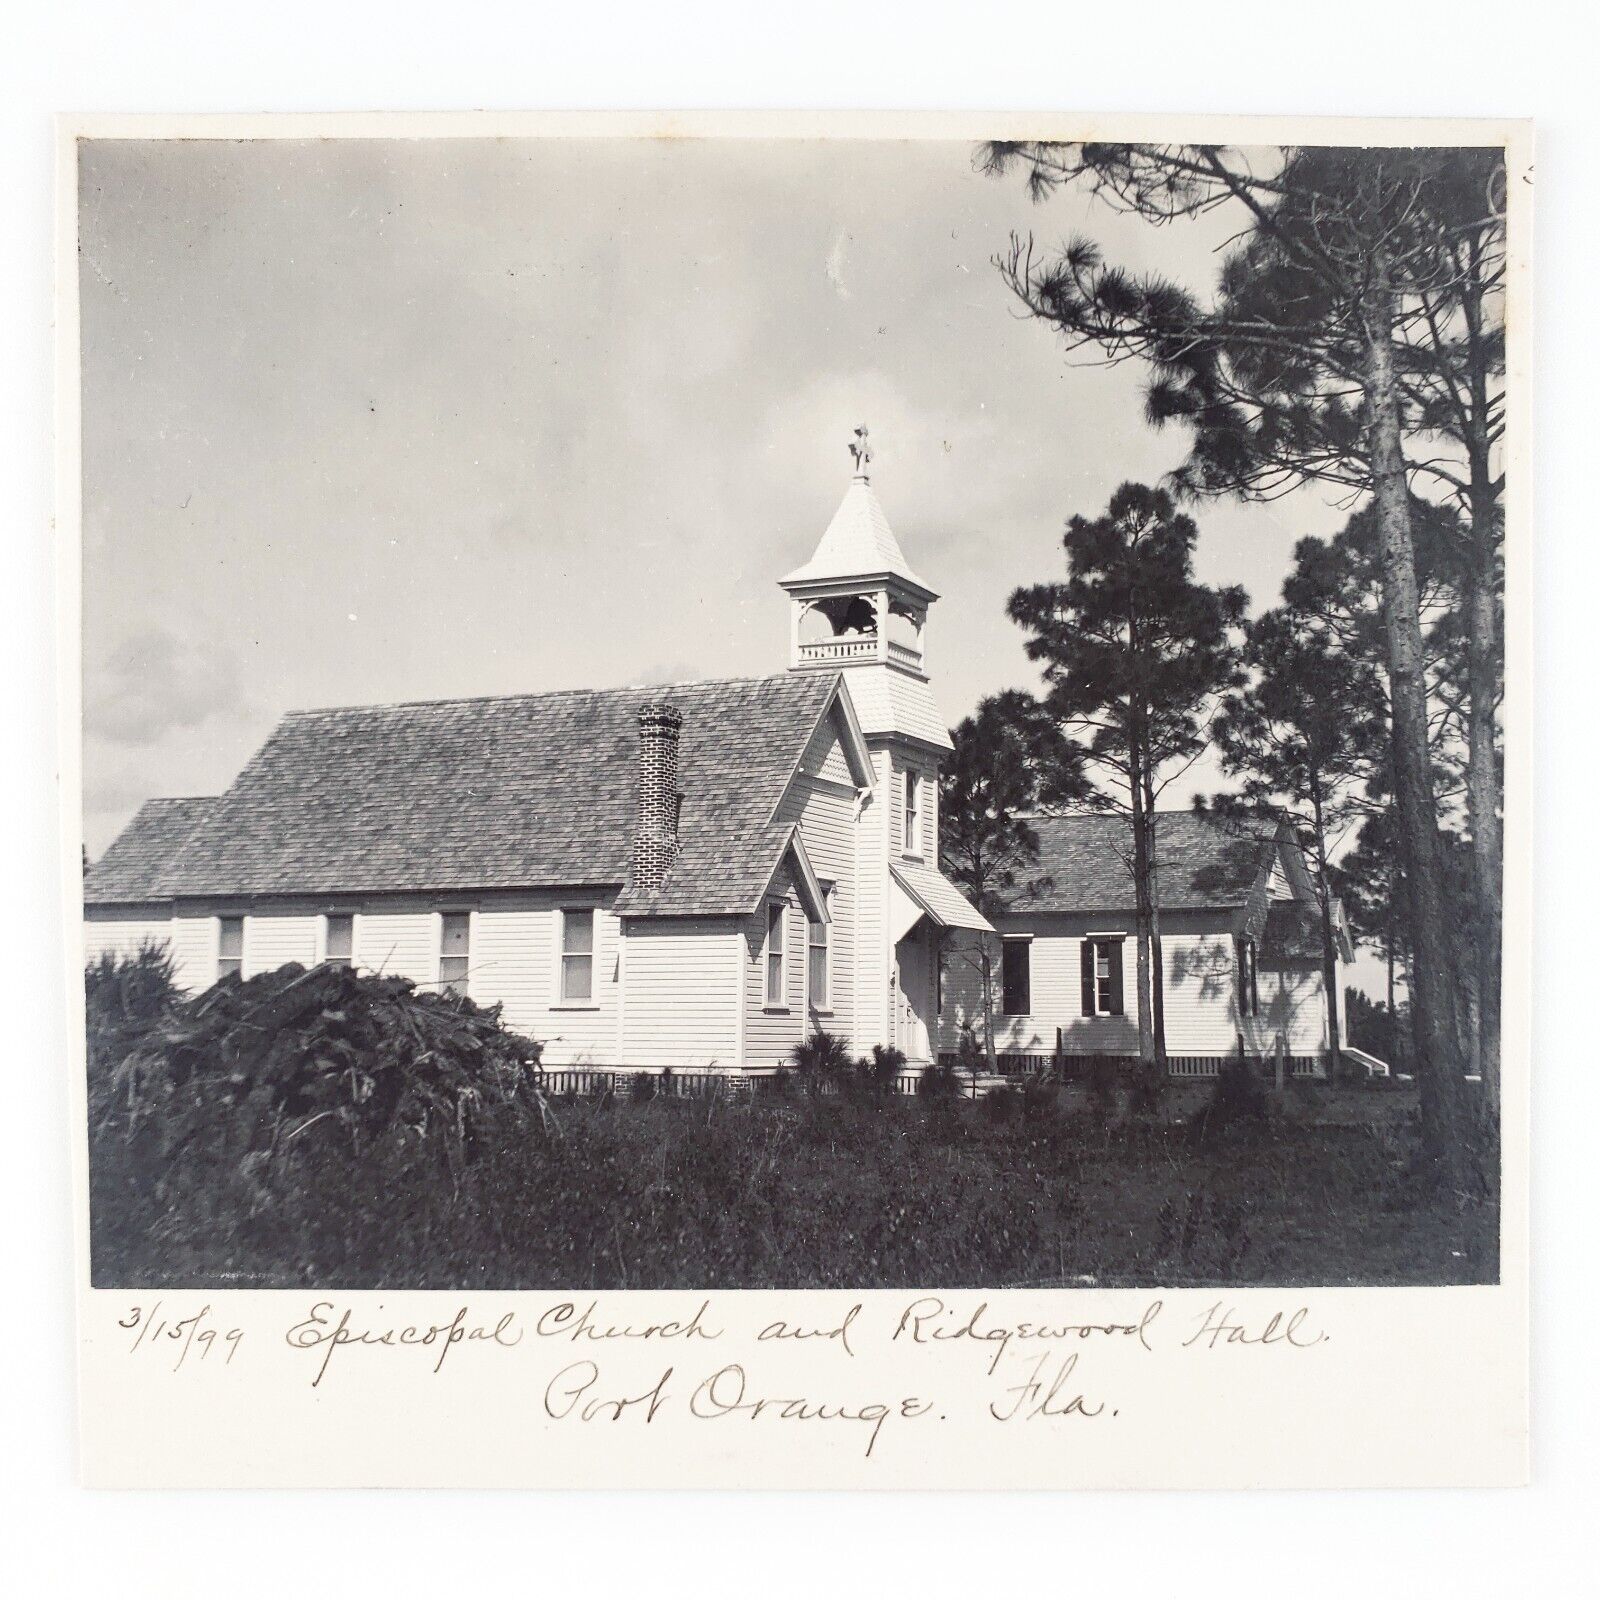 Florida Grace Episcopal Church Photo c1899 Port Orange Guild Hall Building B1672